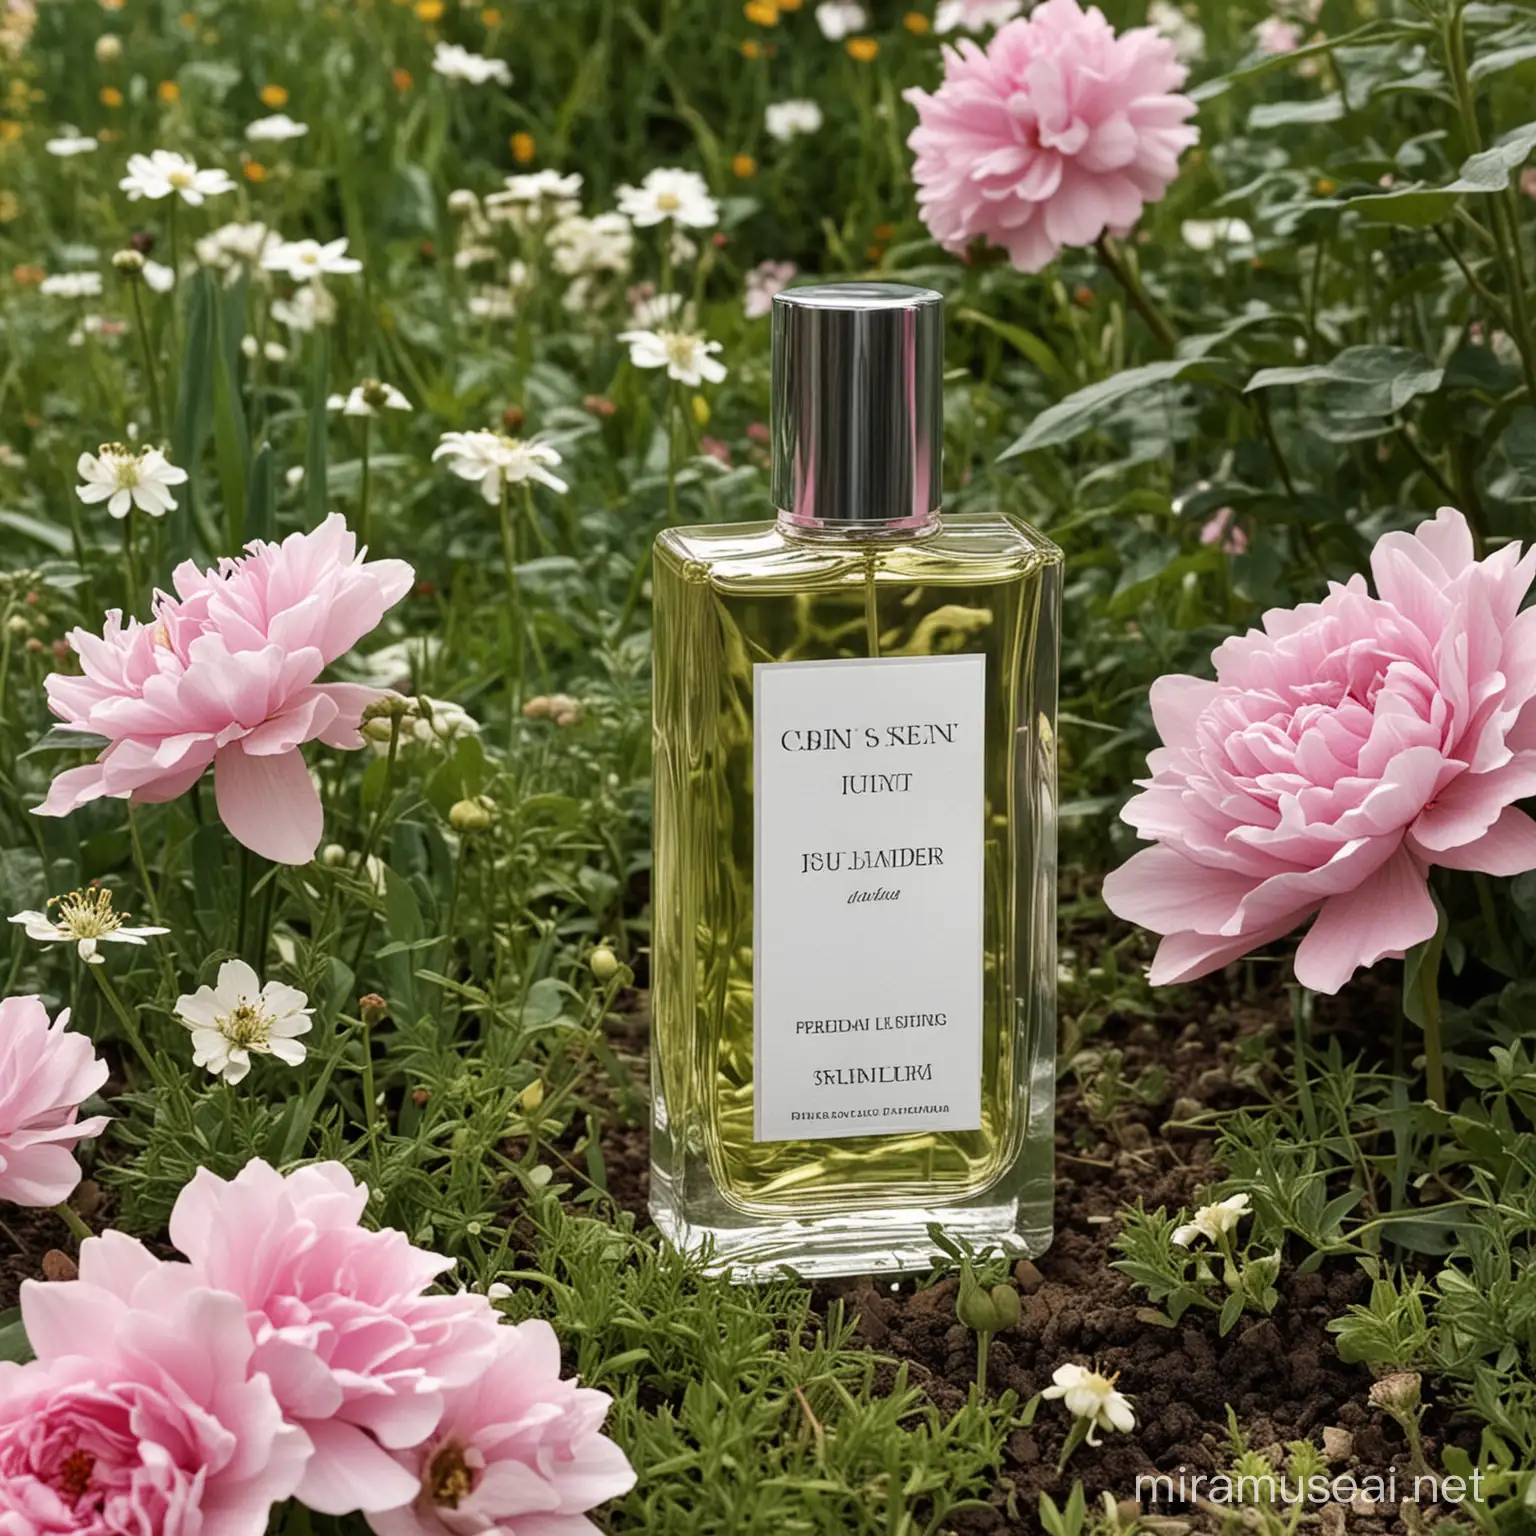 Unisex Perfume Fragrance in a Lush Garden Setting